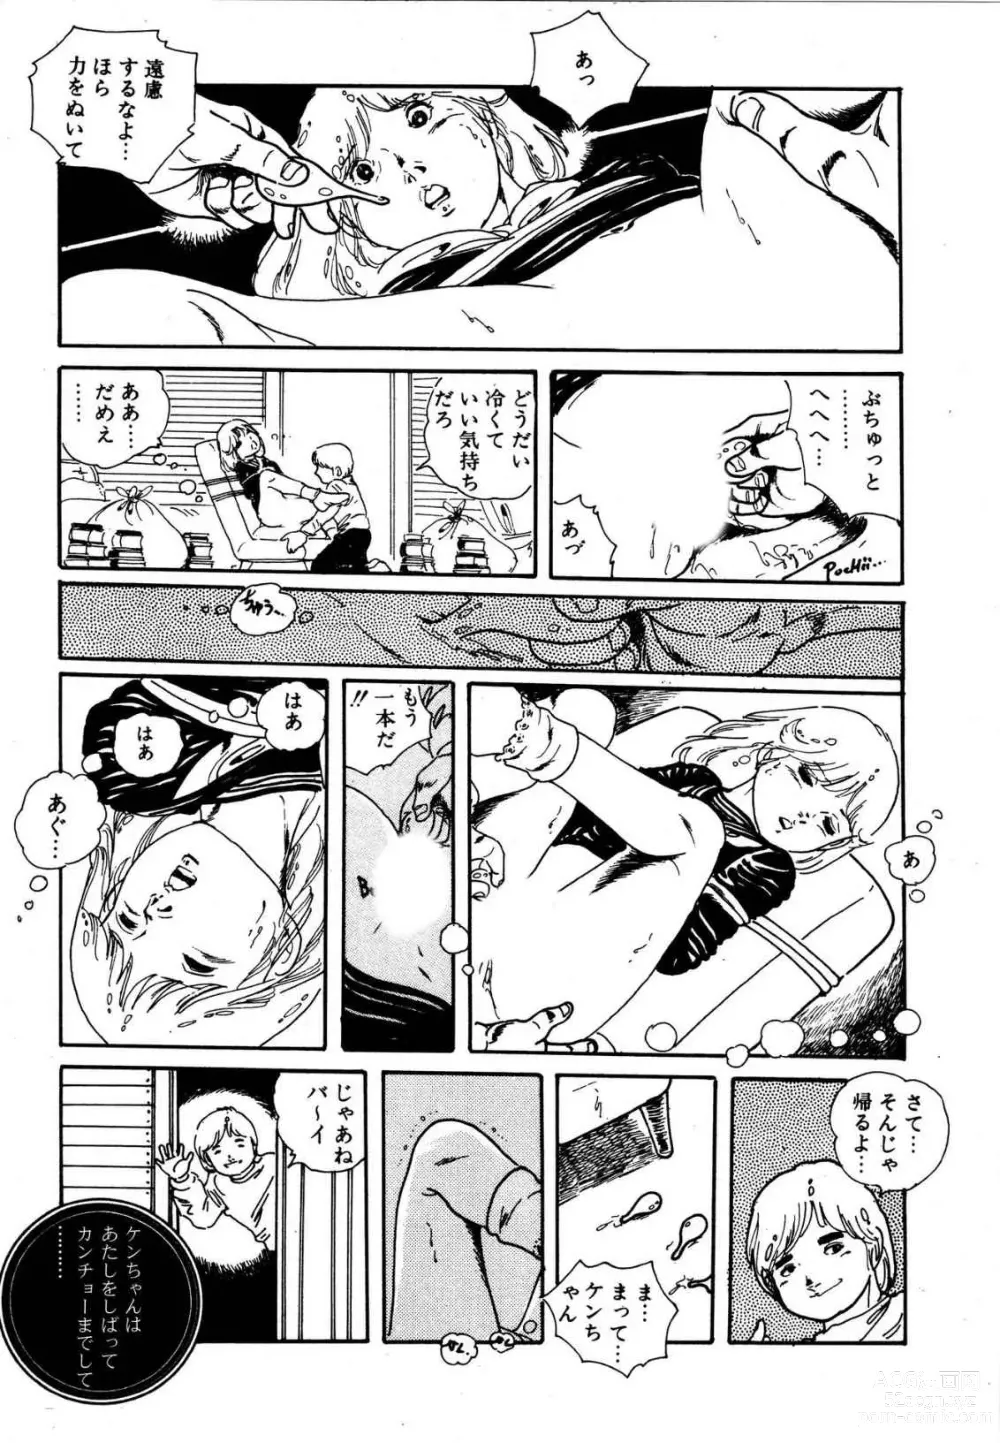 Page 14 of manga Dreaming fairy